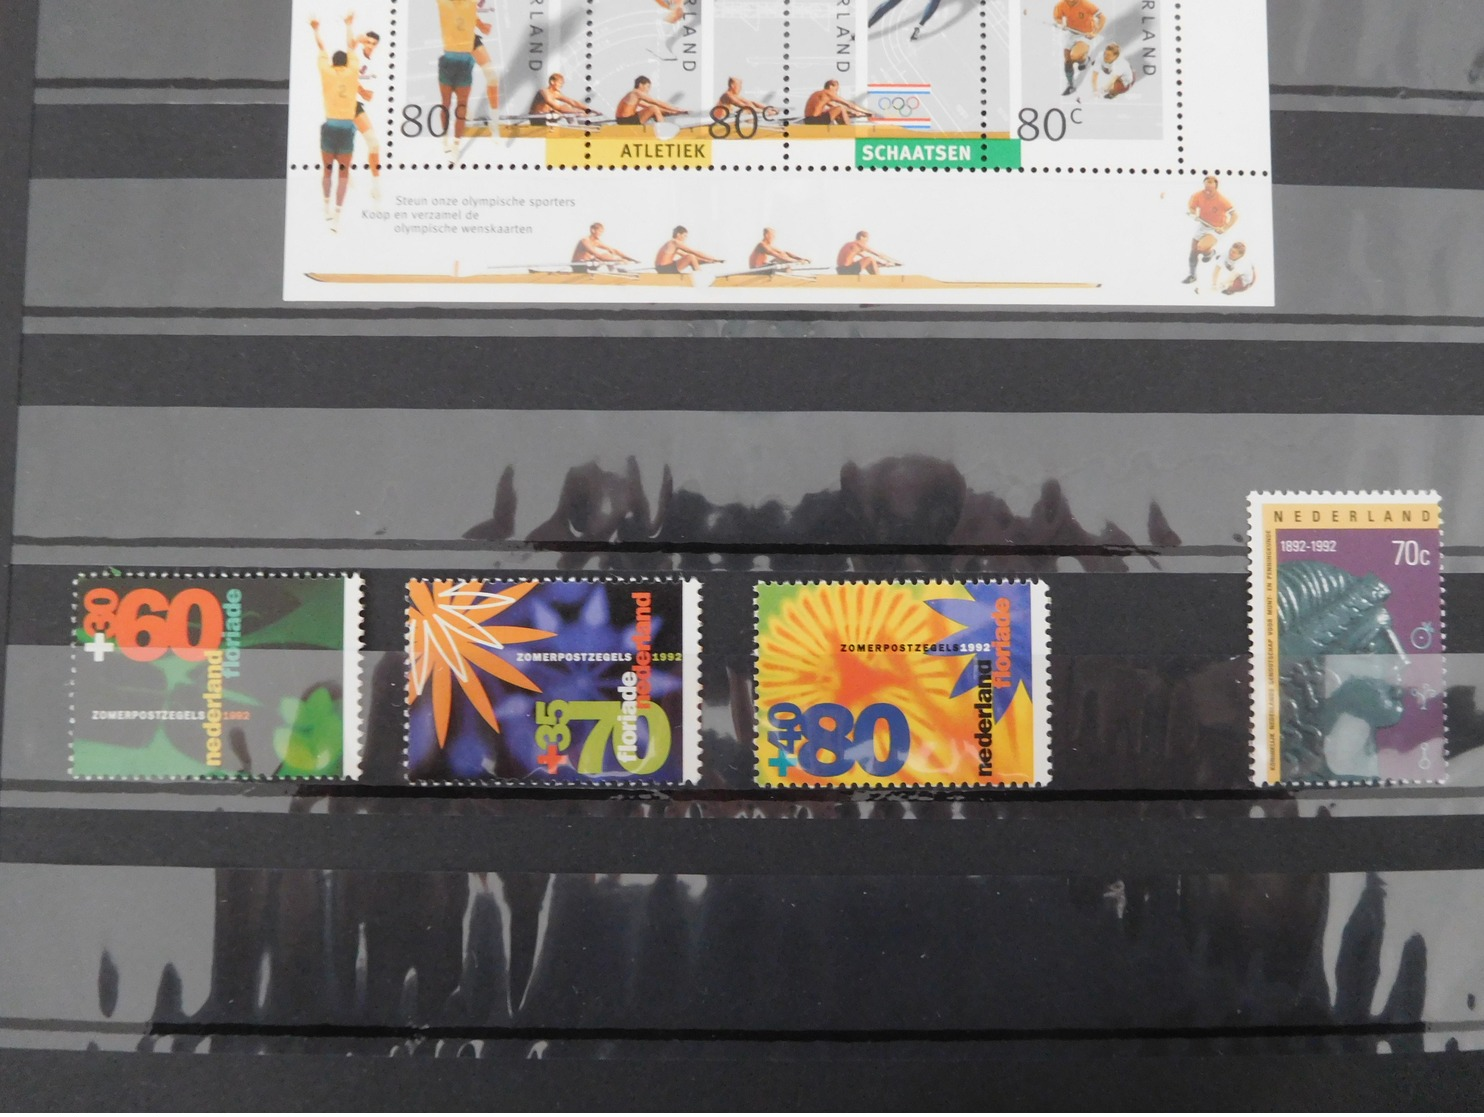 Nederland 1985/1994 - 6 albums - postzegels- EDB- PTT mapjes - FDC - profil bladen-automaatzegels-vellen en blokken